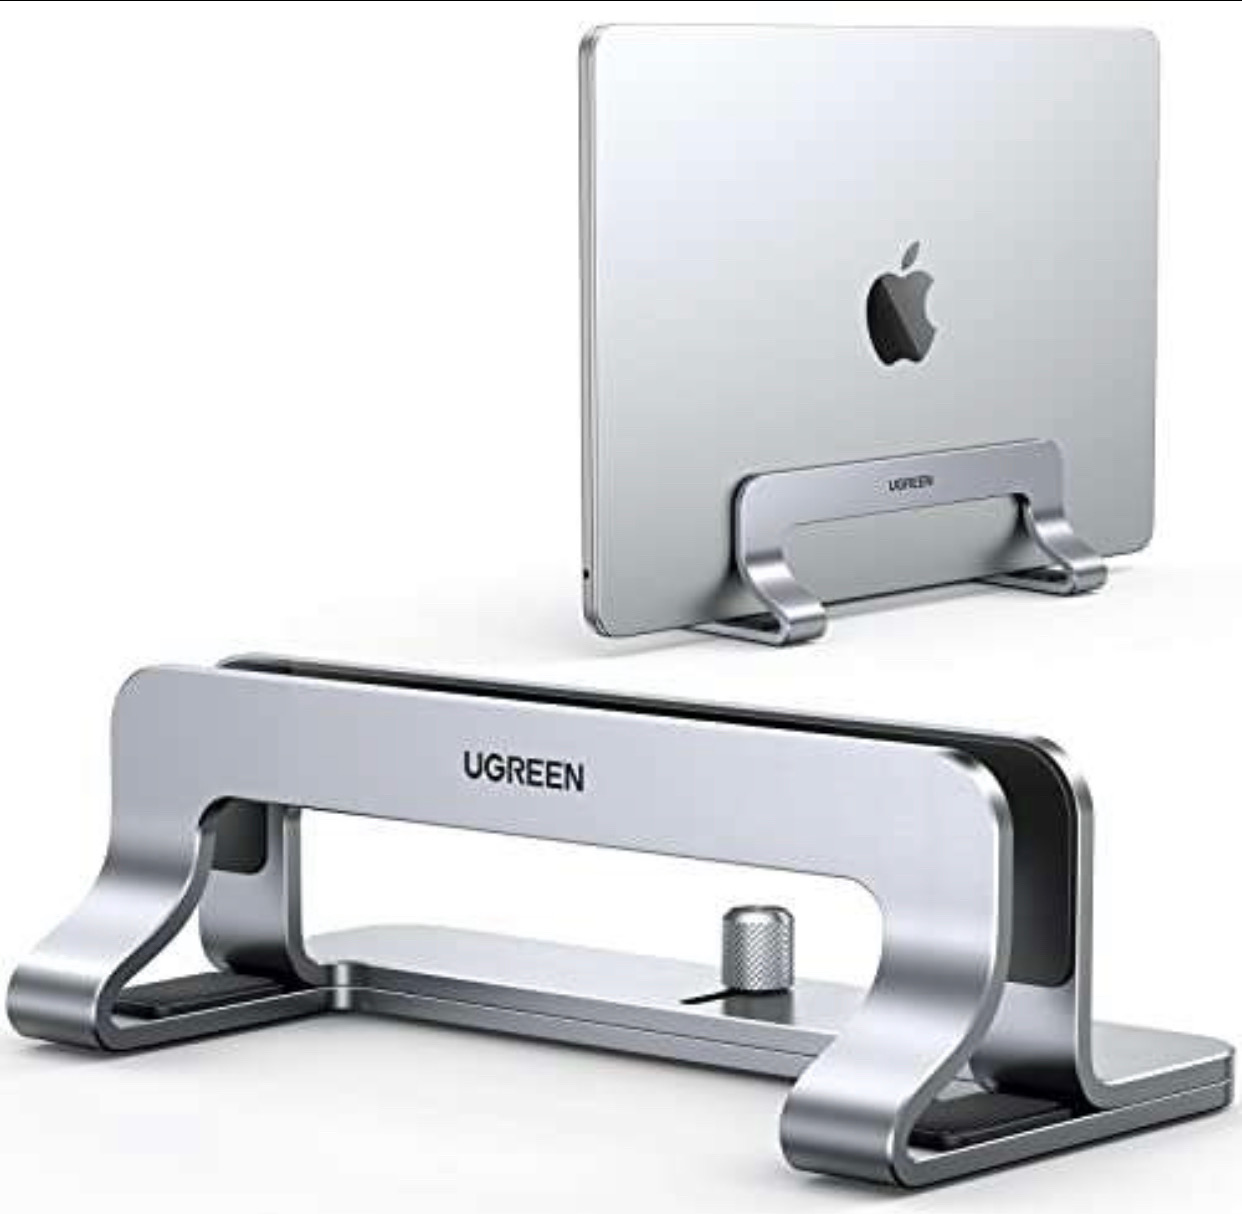 🤩 UGREEN Laptop Ständer Aluminium für 12,27€ (statt 15€)